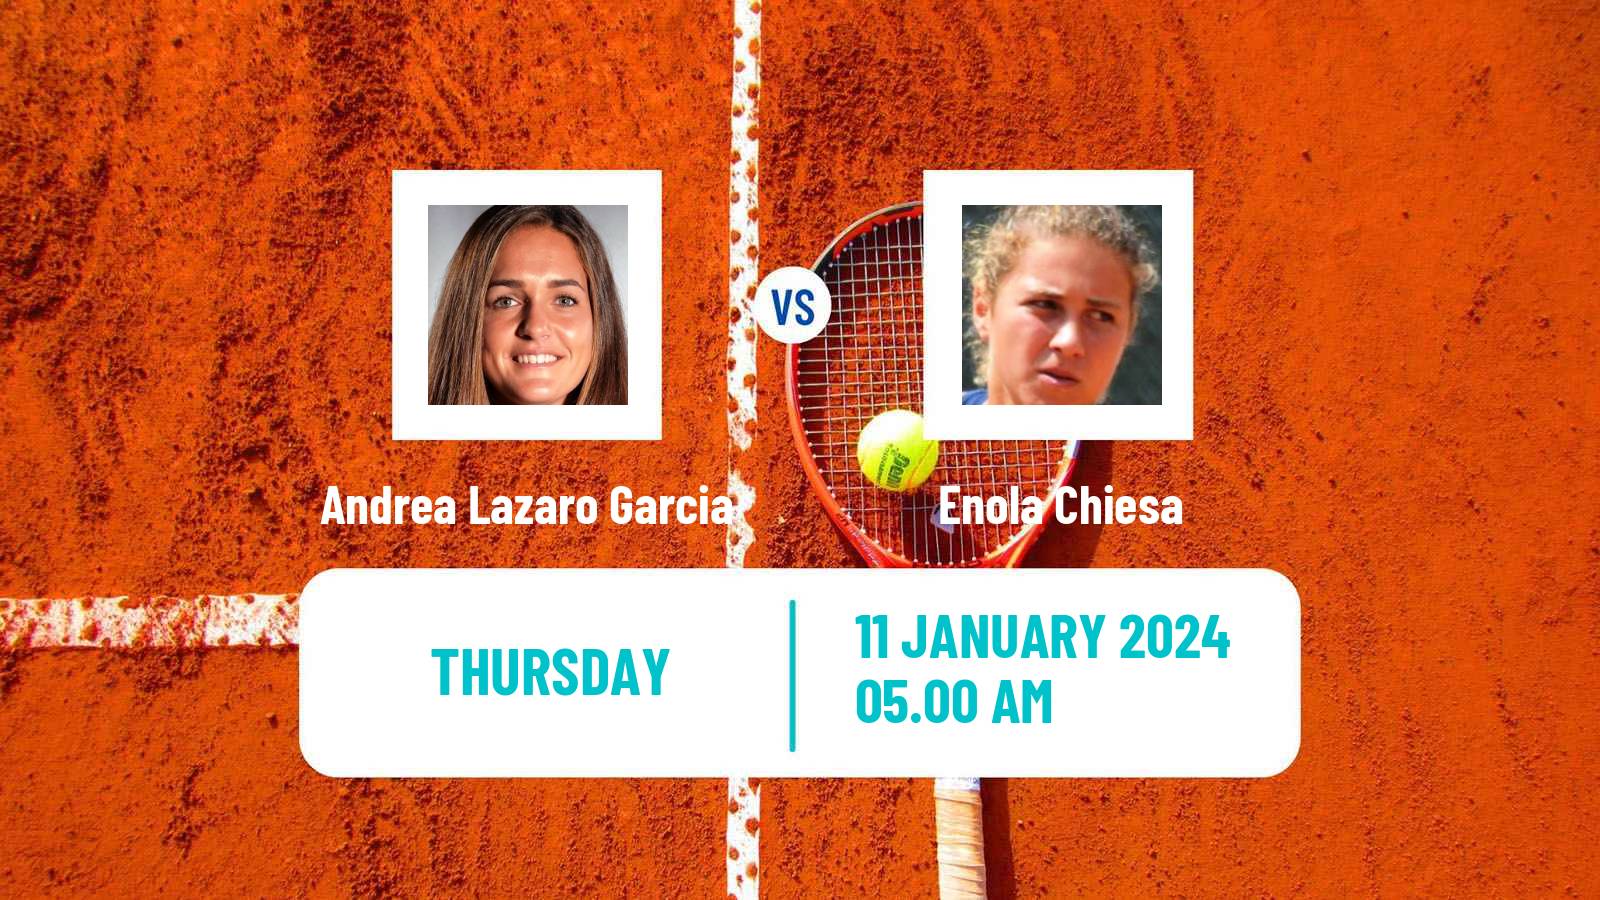 Tennis ITF W35 Antalya Women Andrea Lazaro Garcia - Enola Chiesa